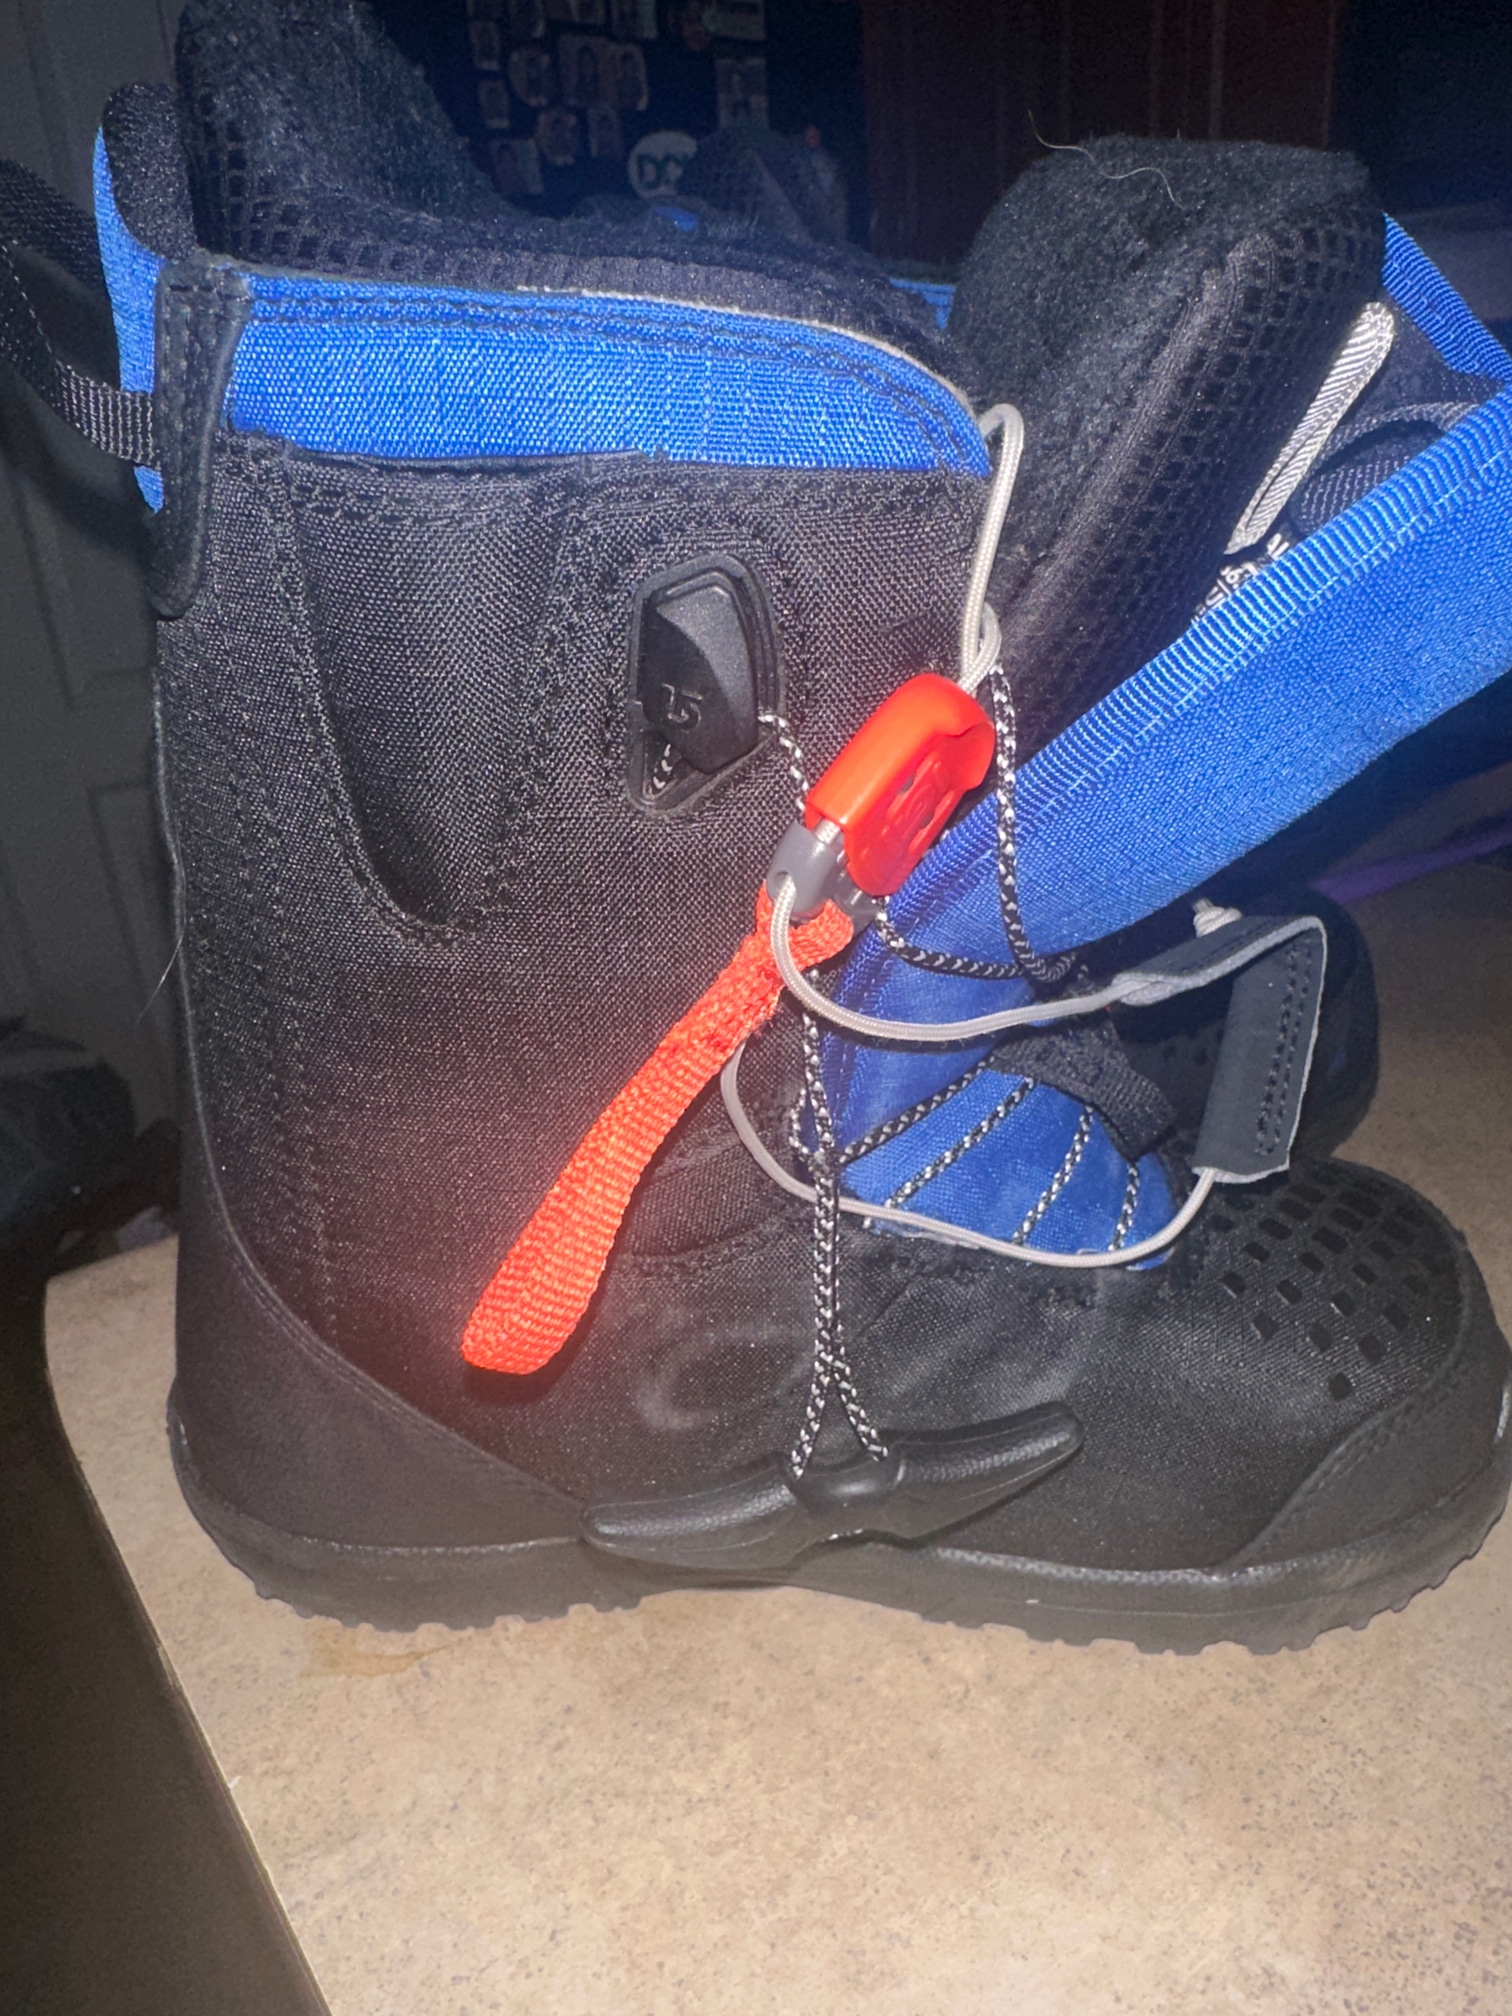 Used Unisex Size 5.0 (Women's 6.0) Burton Snowboard Boots Adjustable Flex All Mountain